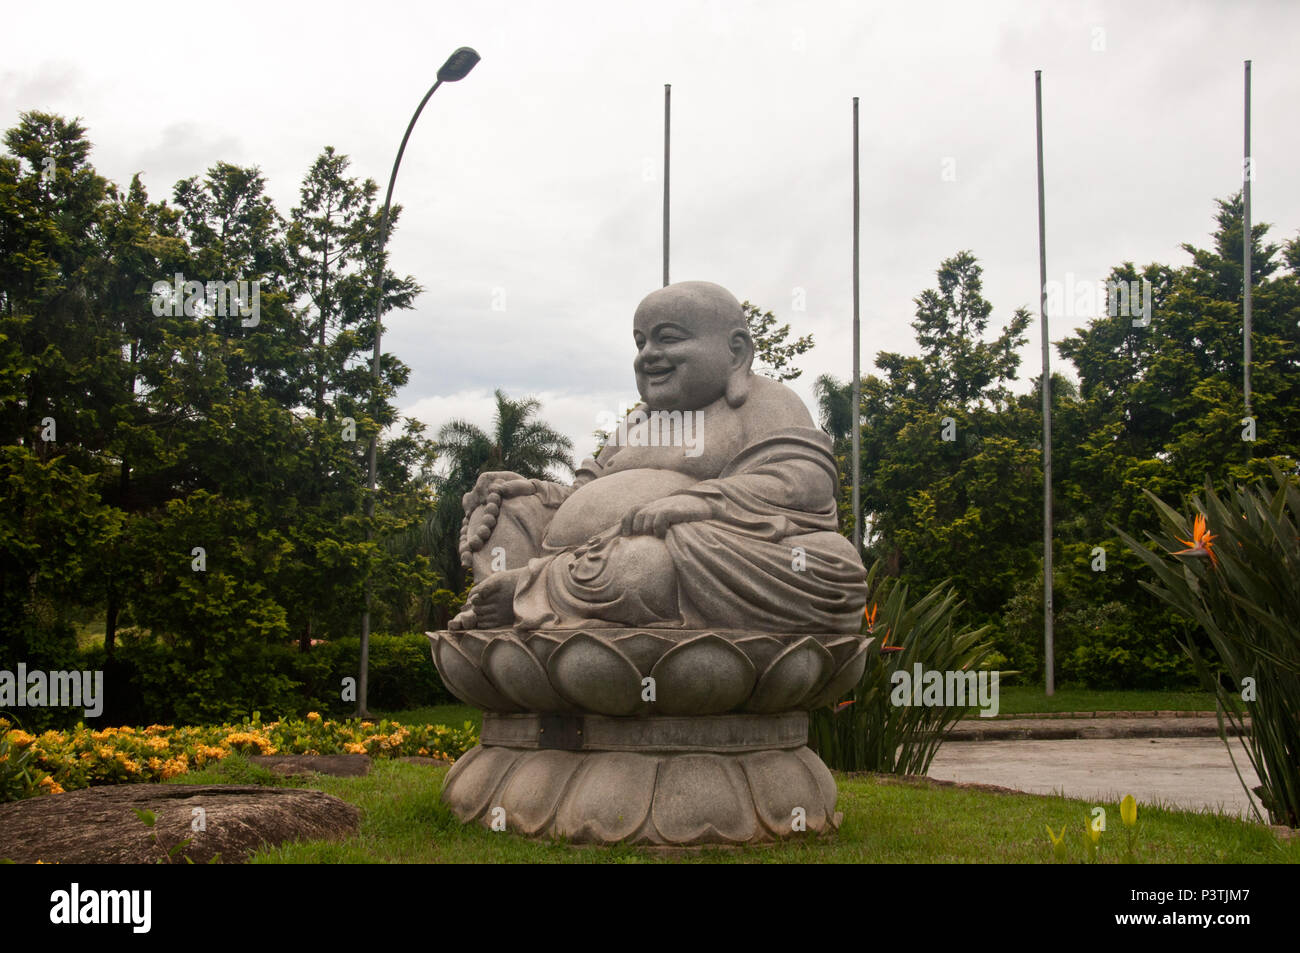 COTIA, SP - 21.02.2016: TEMPLO ZU LAI-Estátua de Buda na entrada Templo budista Lai zu tun. (Foto: Daniela Maria/Fotoarena) Stockfoto